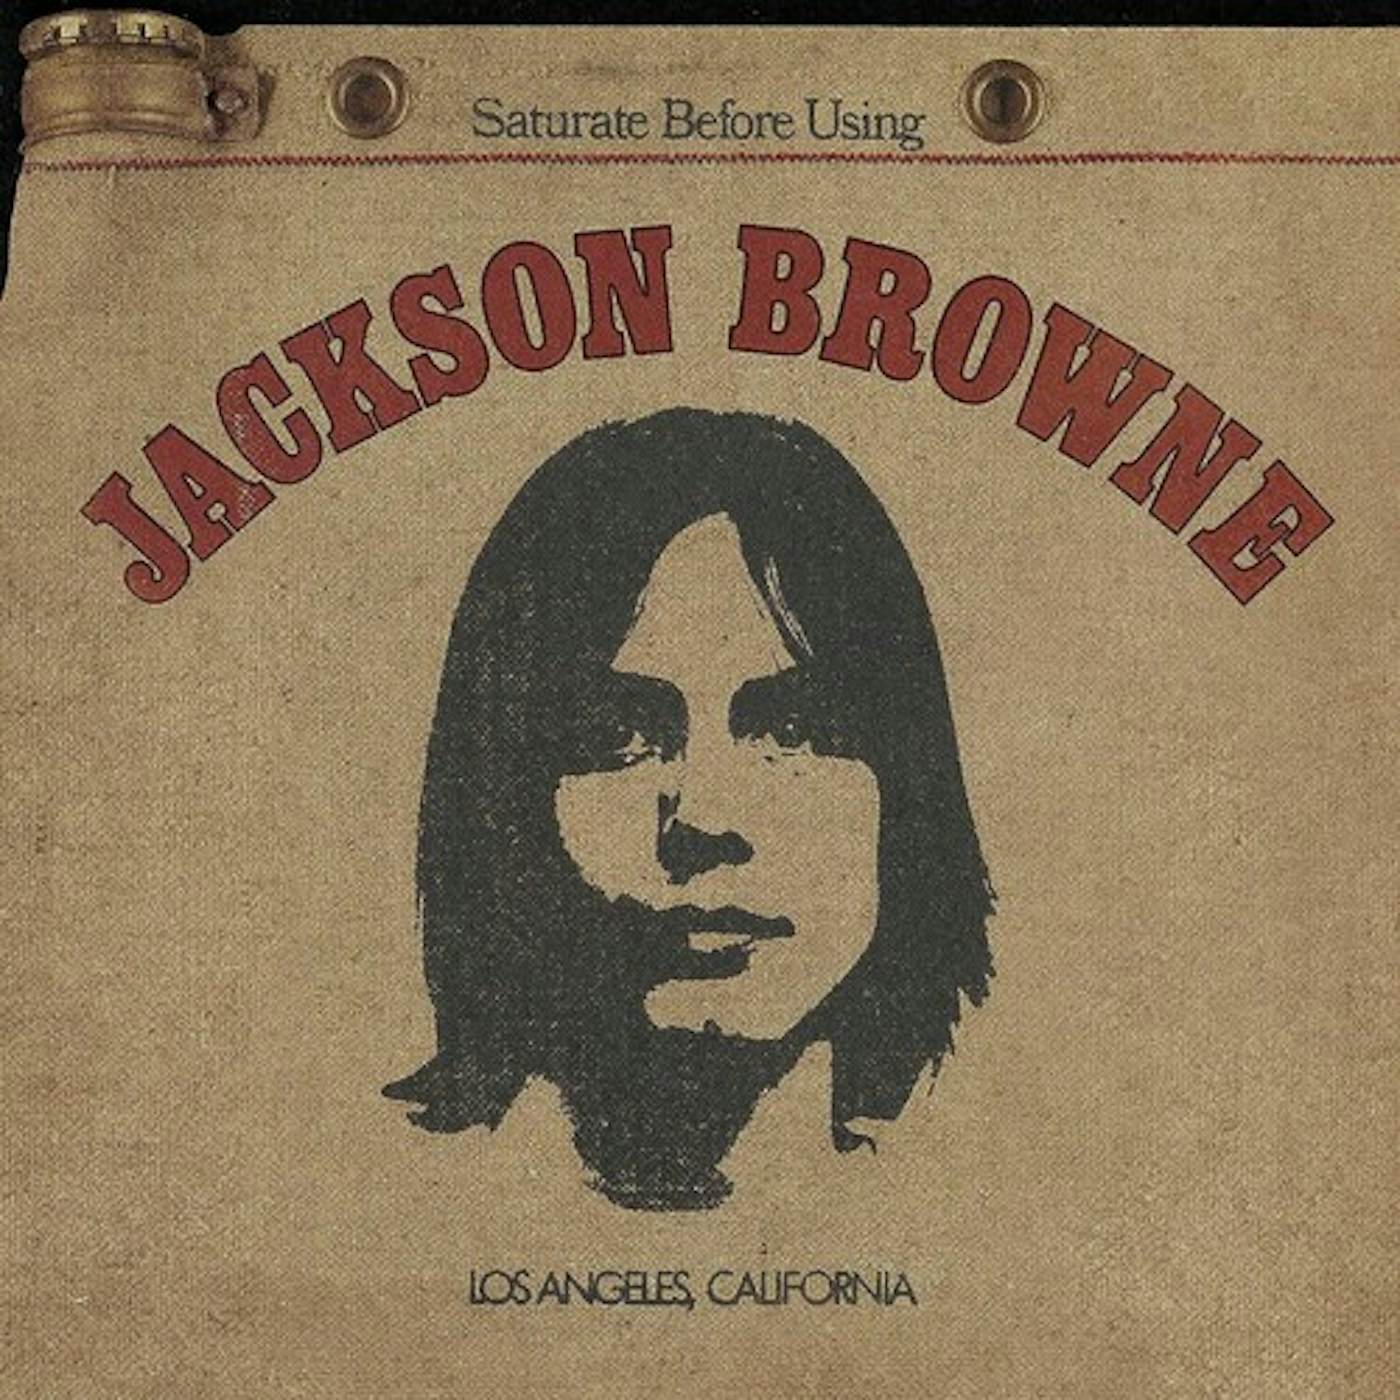 JACKSON BROWNE CD